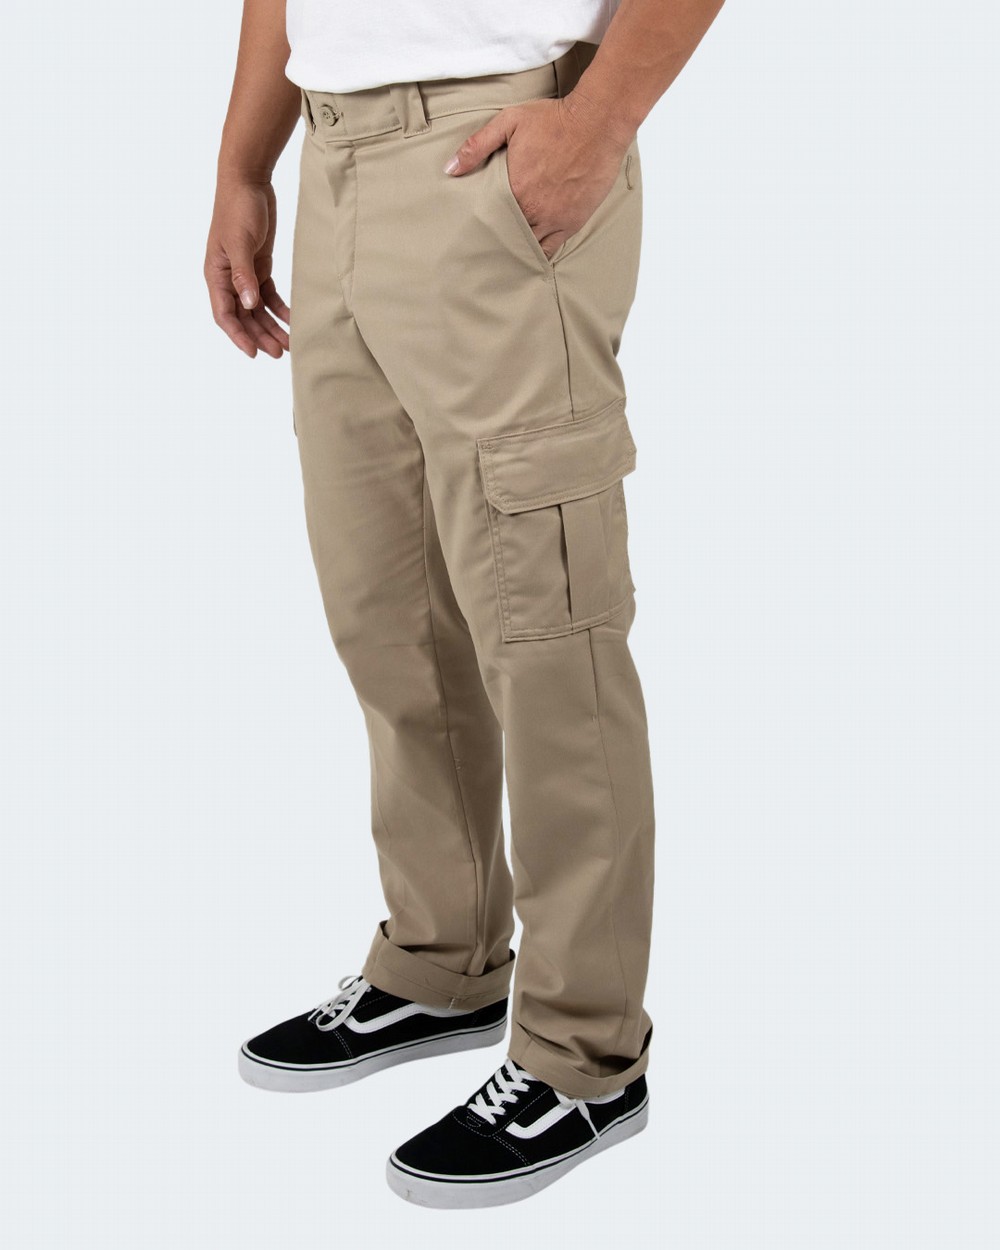 Buy Kakadu Australia Derby Cargo Pants  Multi Pockets Mens Trousers  Mustard at Amazonin